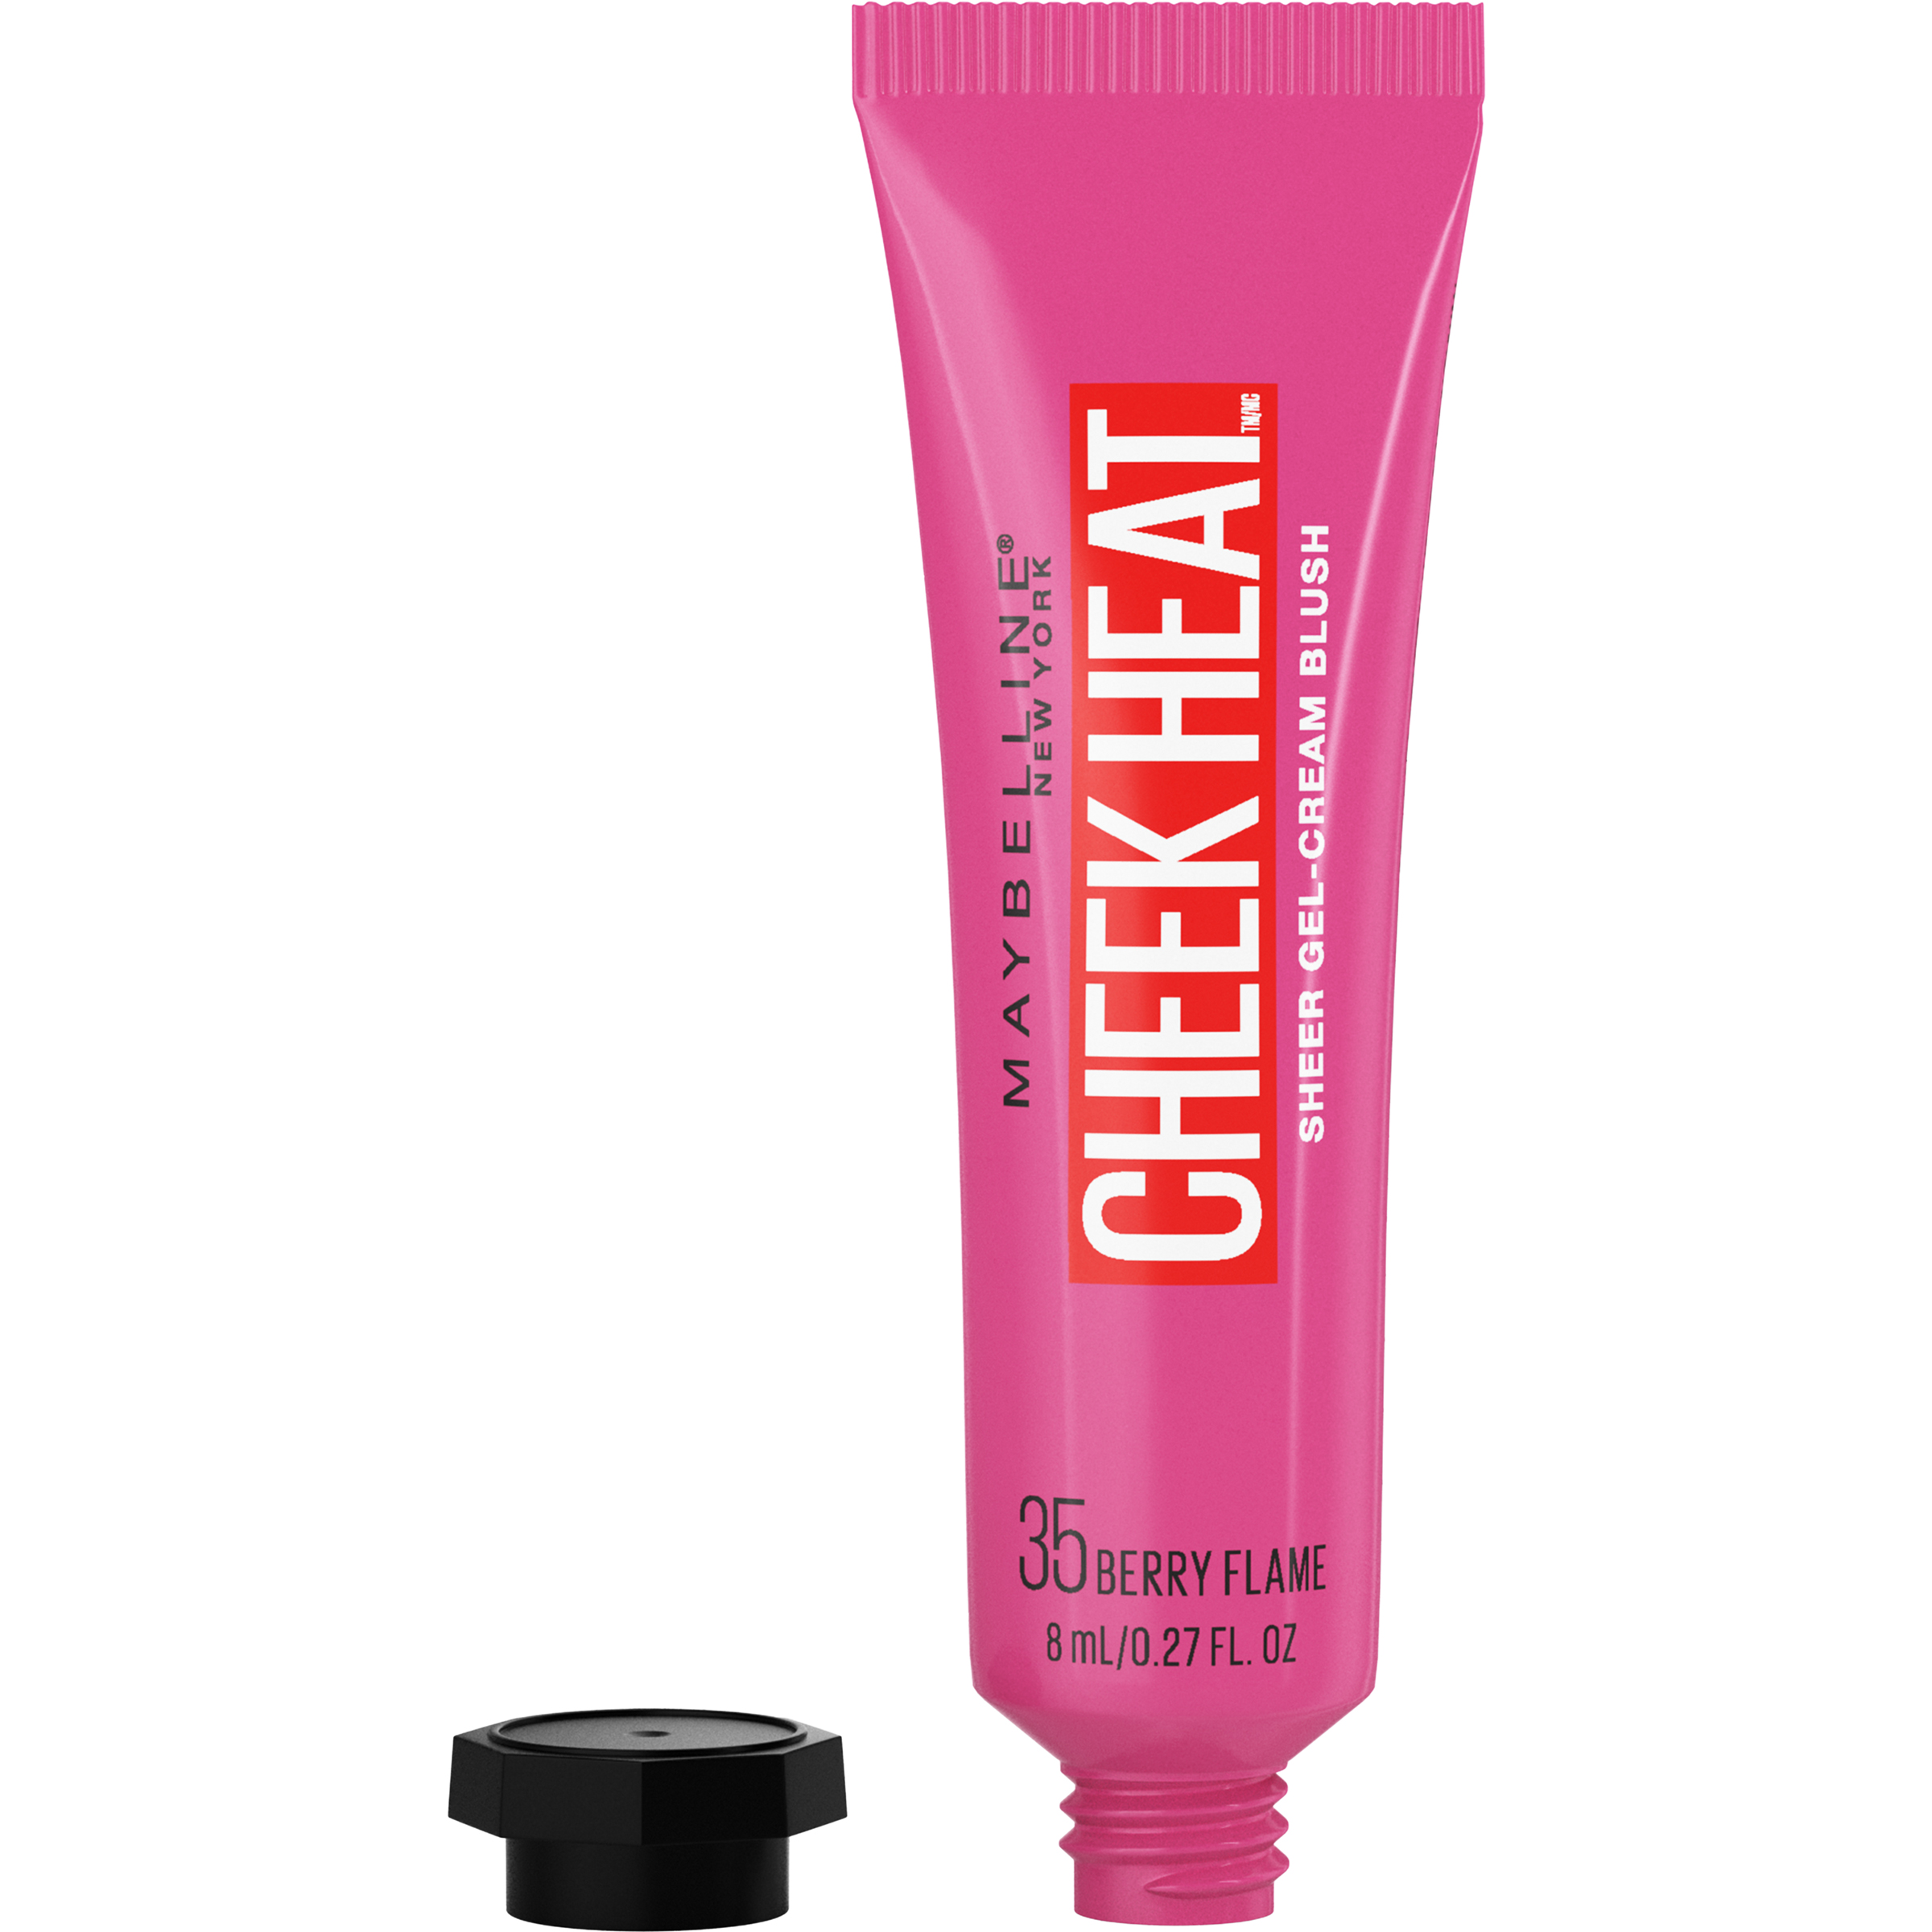 Maybelline Cheek Heat Gel-Cream Blush, Face Makeup, Berry Flame, 0.27 fl oz - image 5 of 12